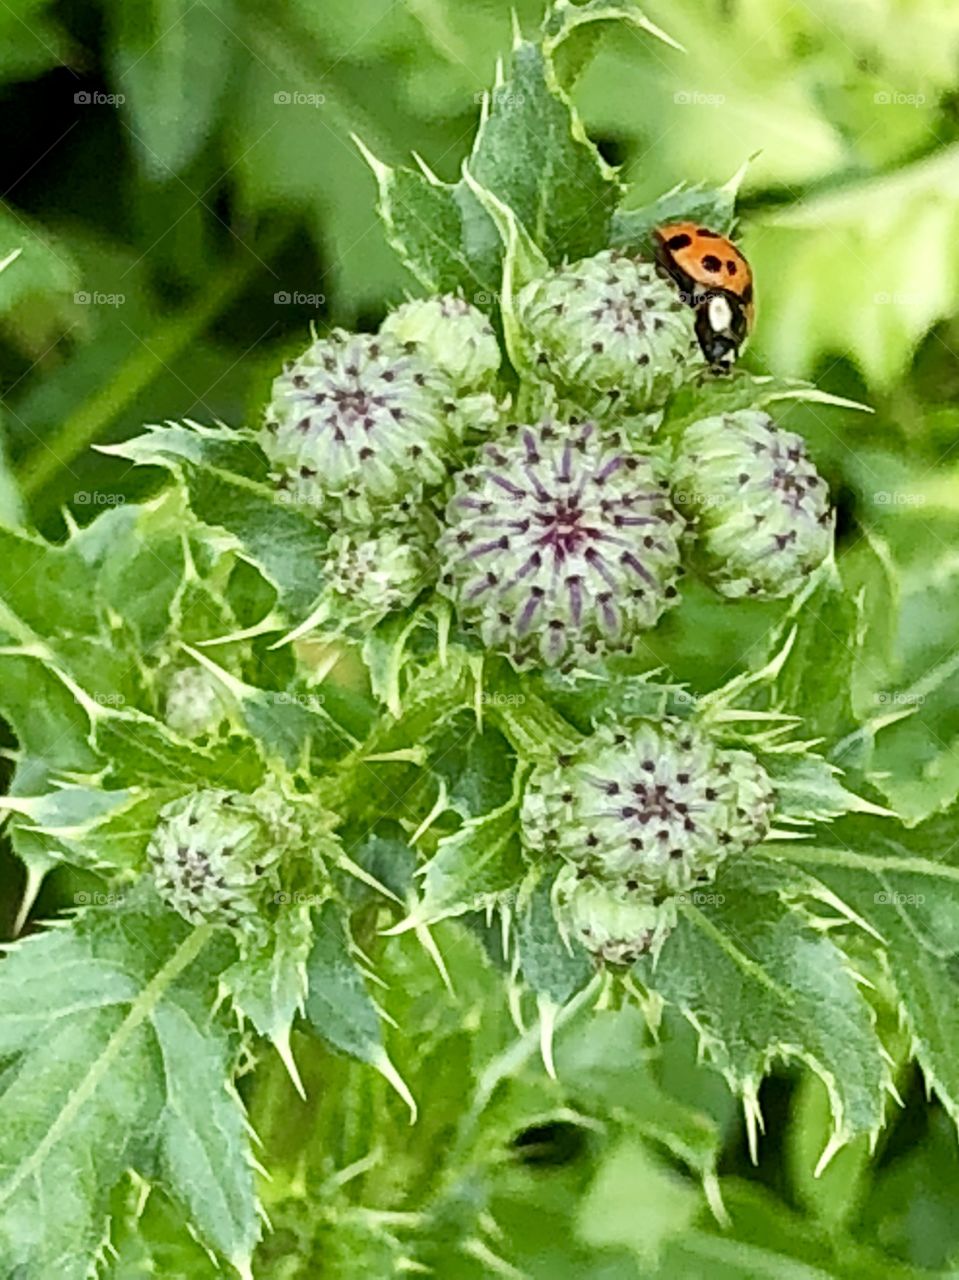 Tight purple buds and ladybug